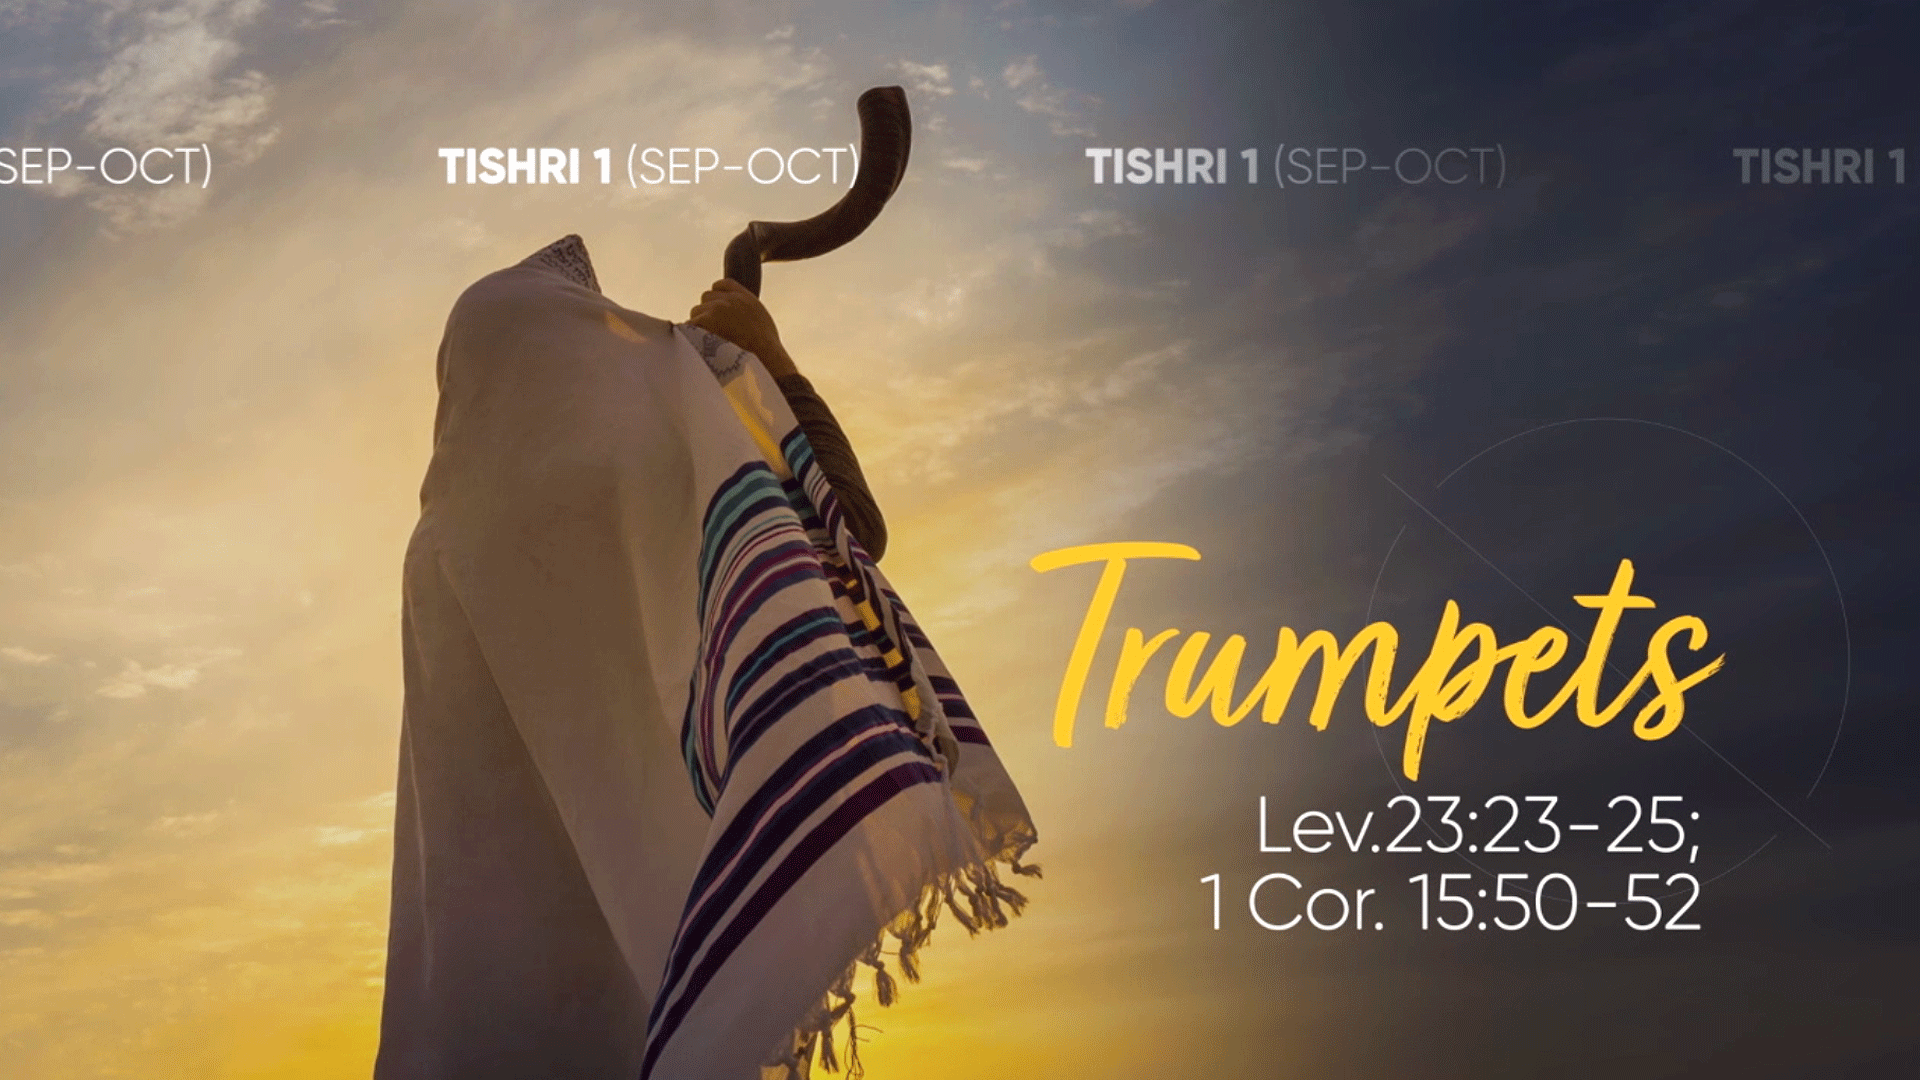 The Jewish Feast of Trumpets